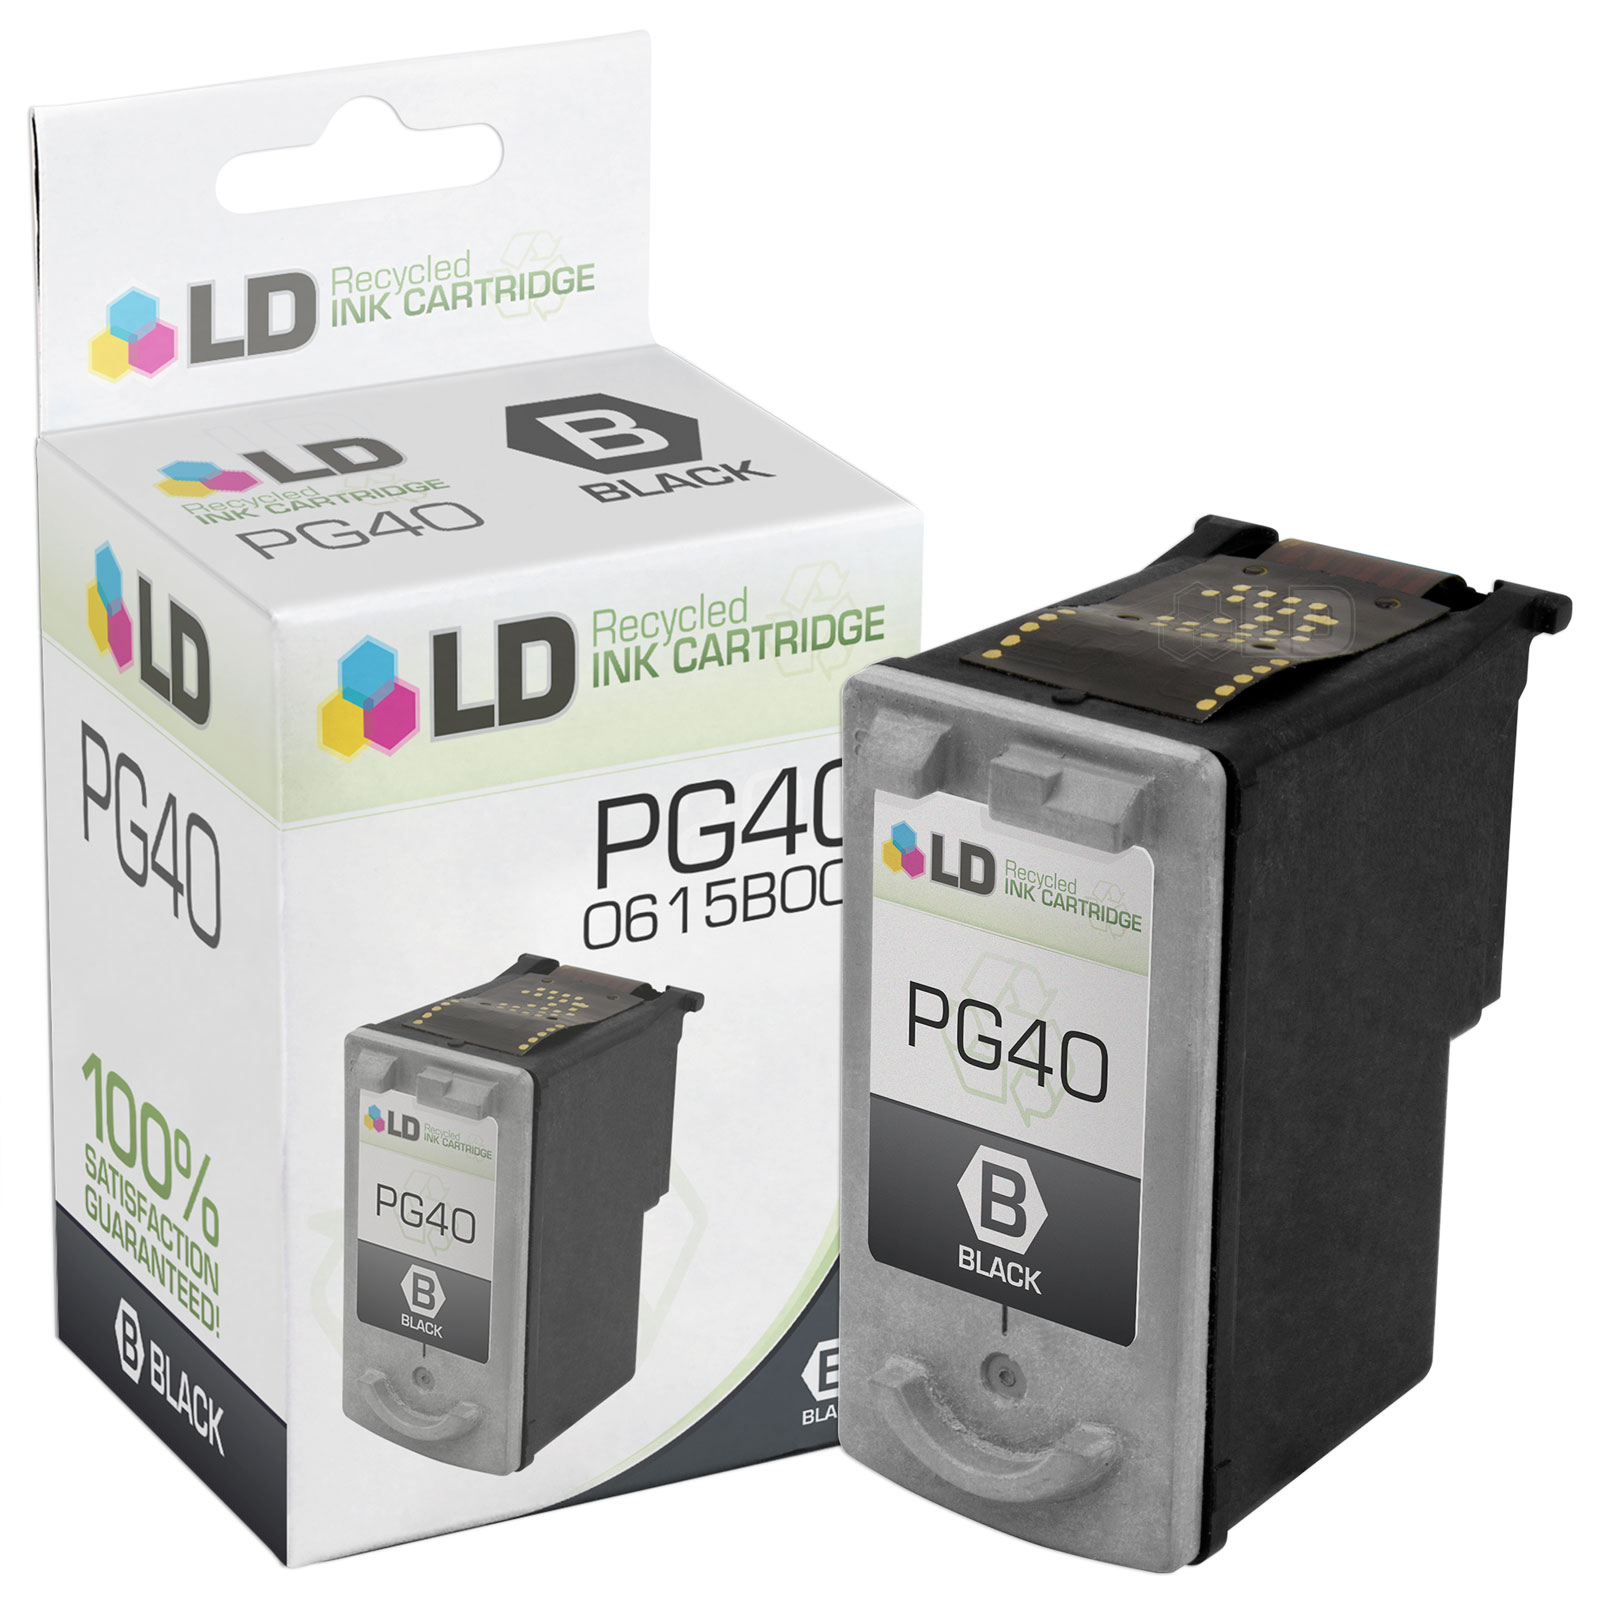 Canon PG40 Pigment Black Remanufactured Cartridge - image 1 of 6